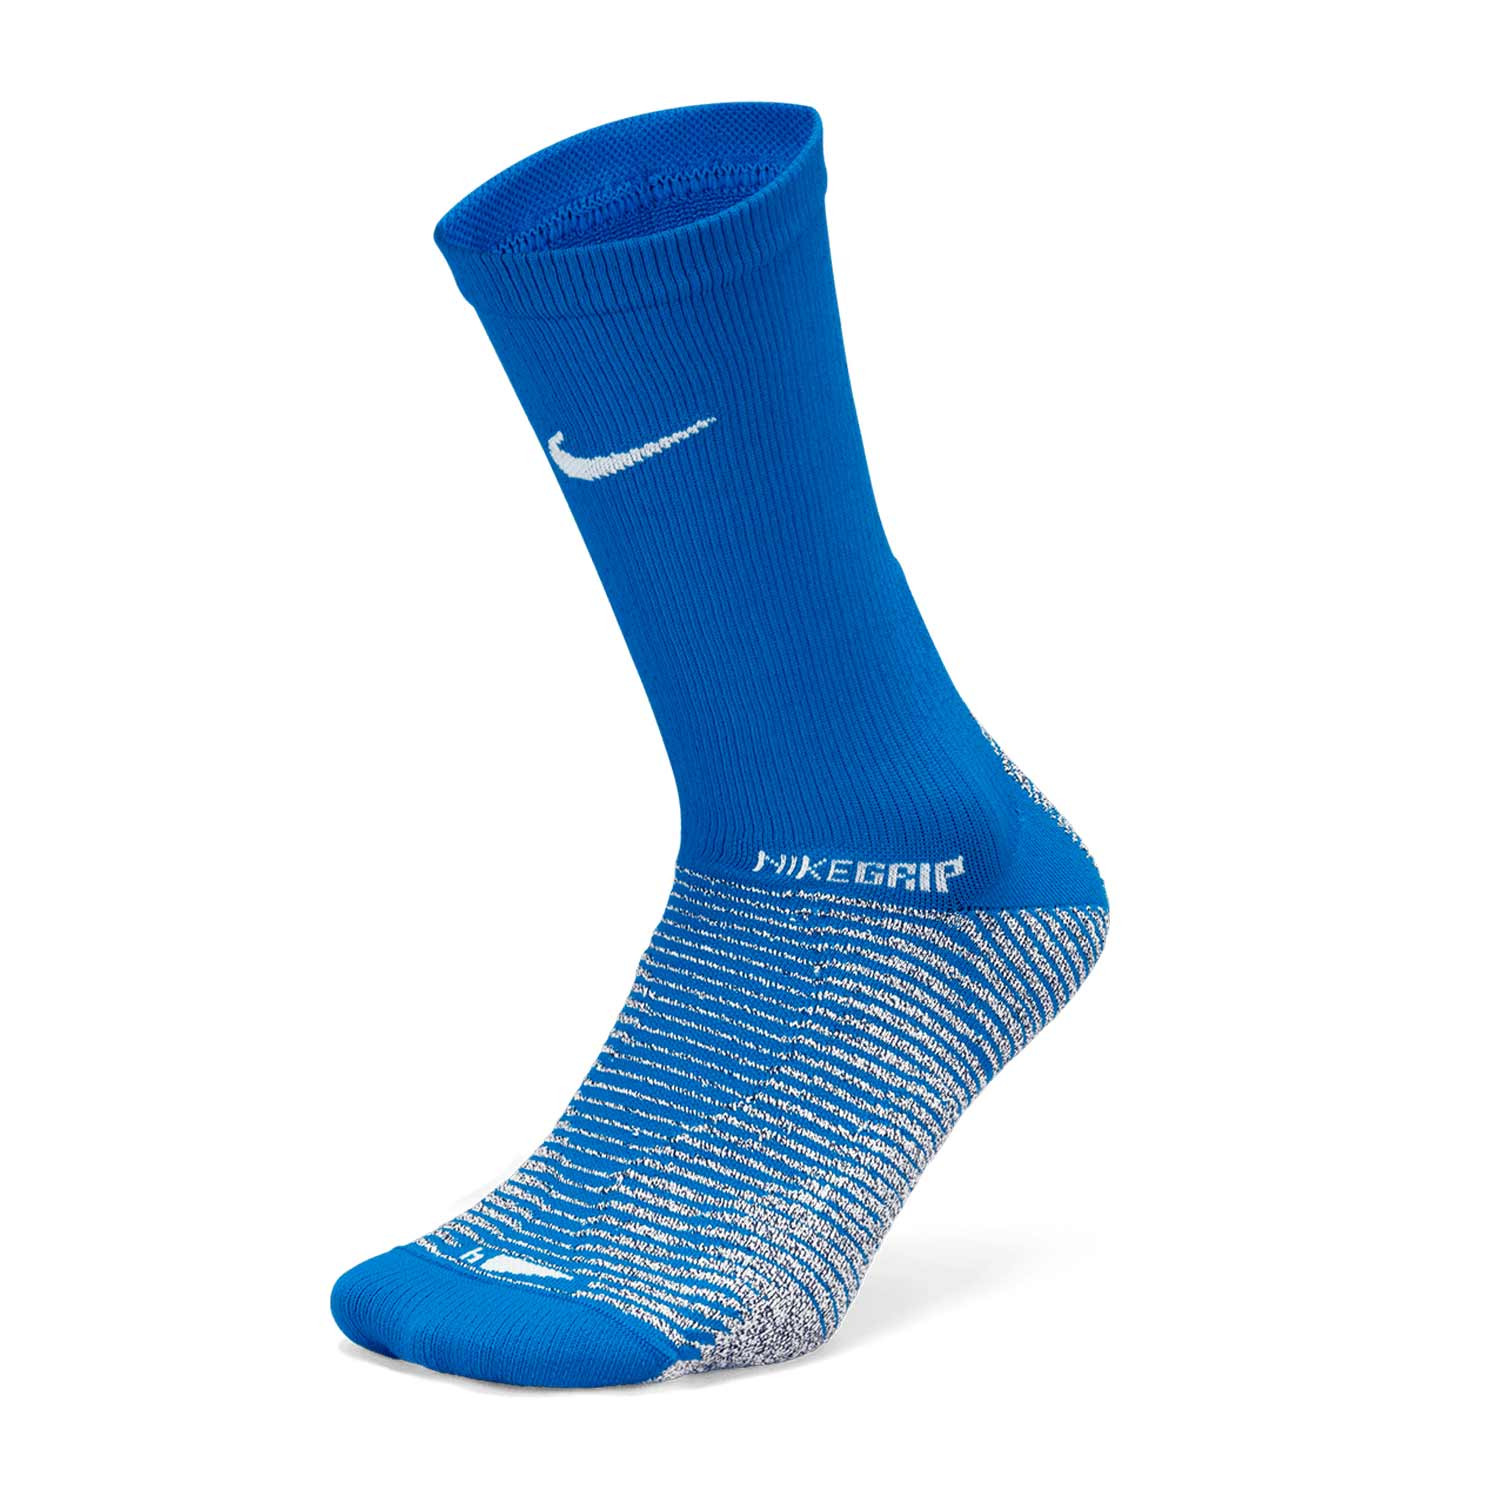 Masculinidad índice Saca la aseguranza Calcetines Nike Grip Strike azules | futbolmania